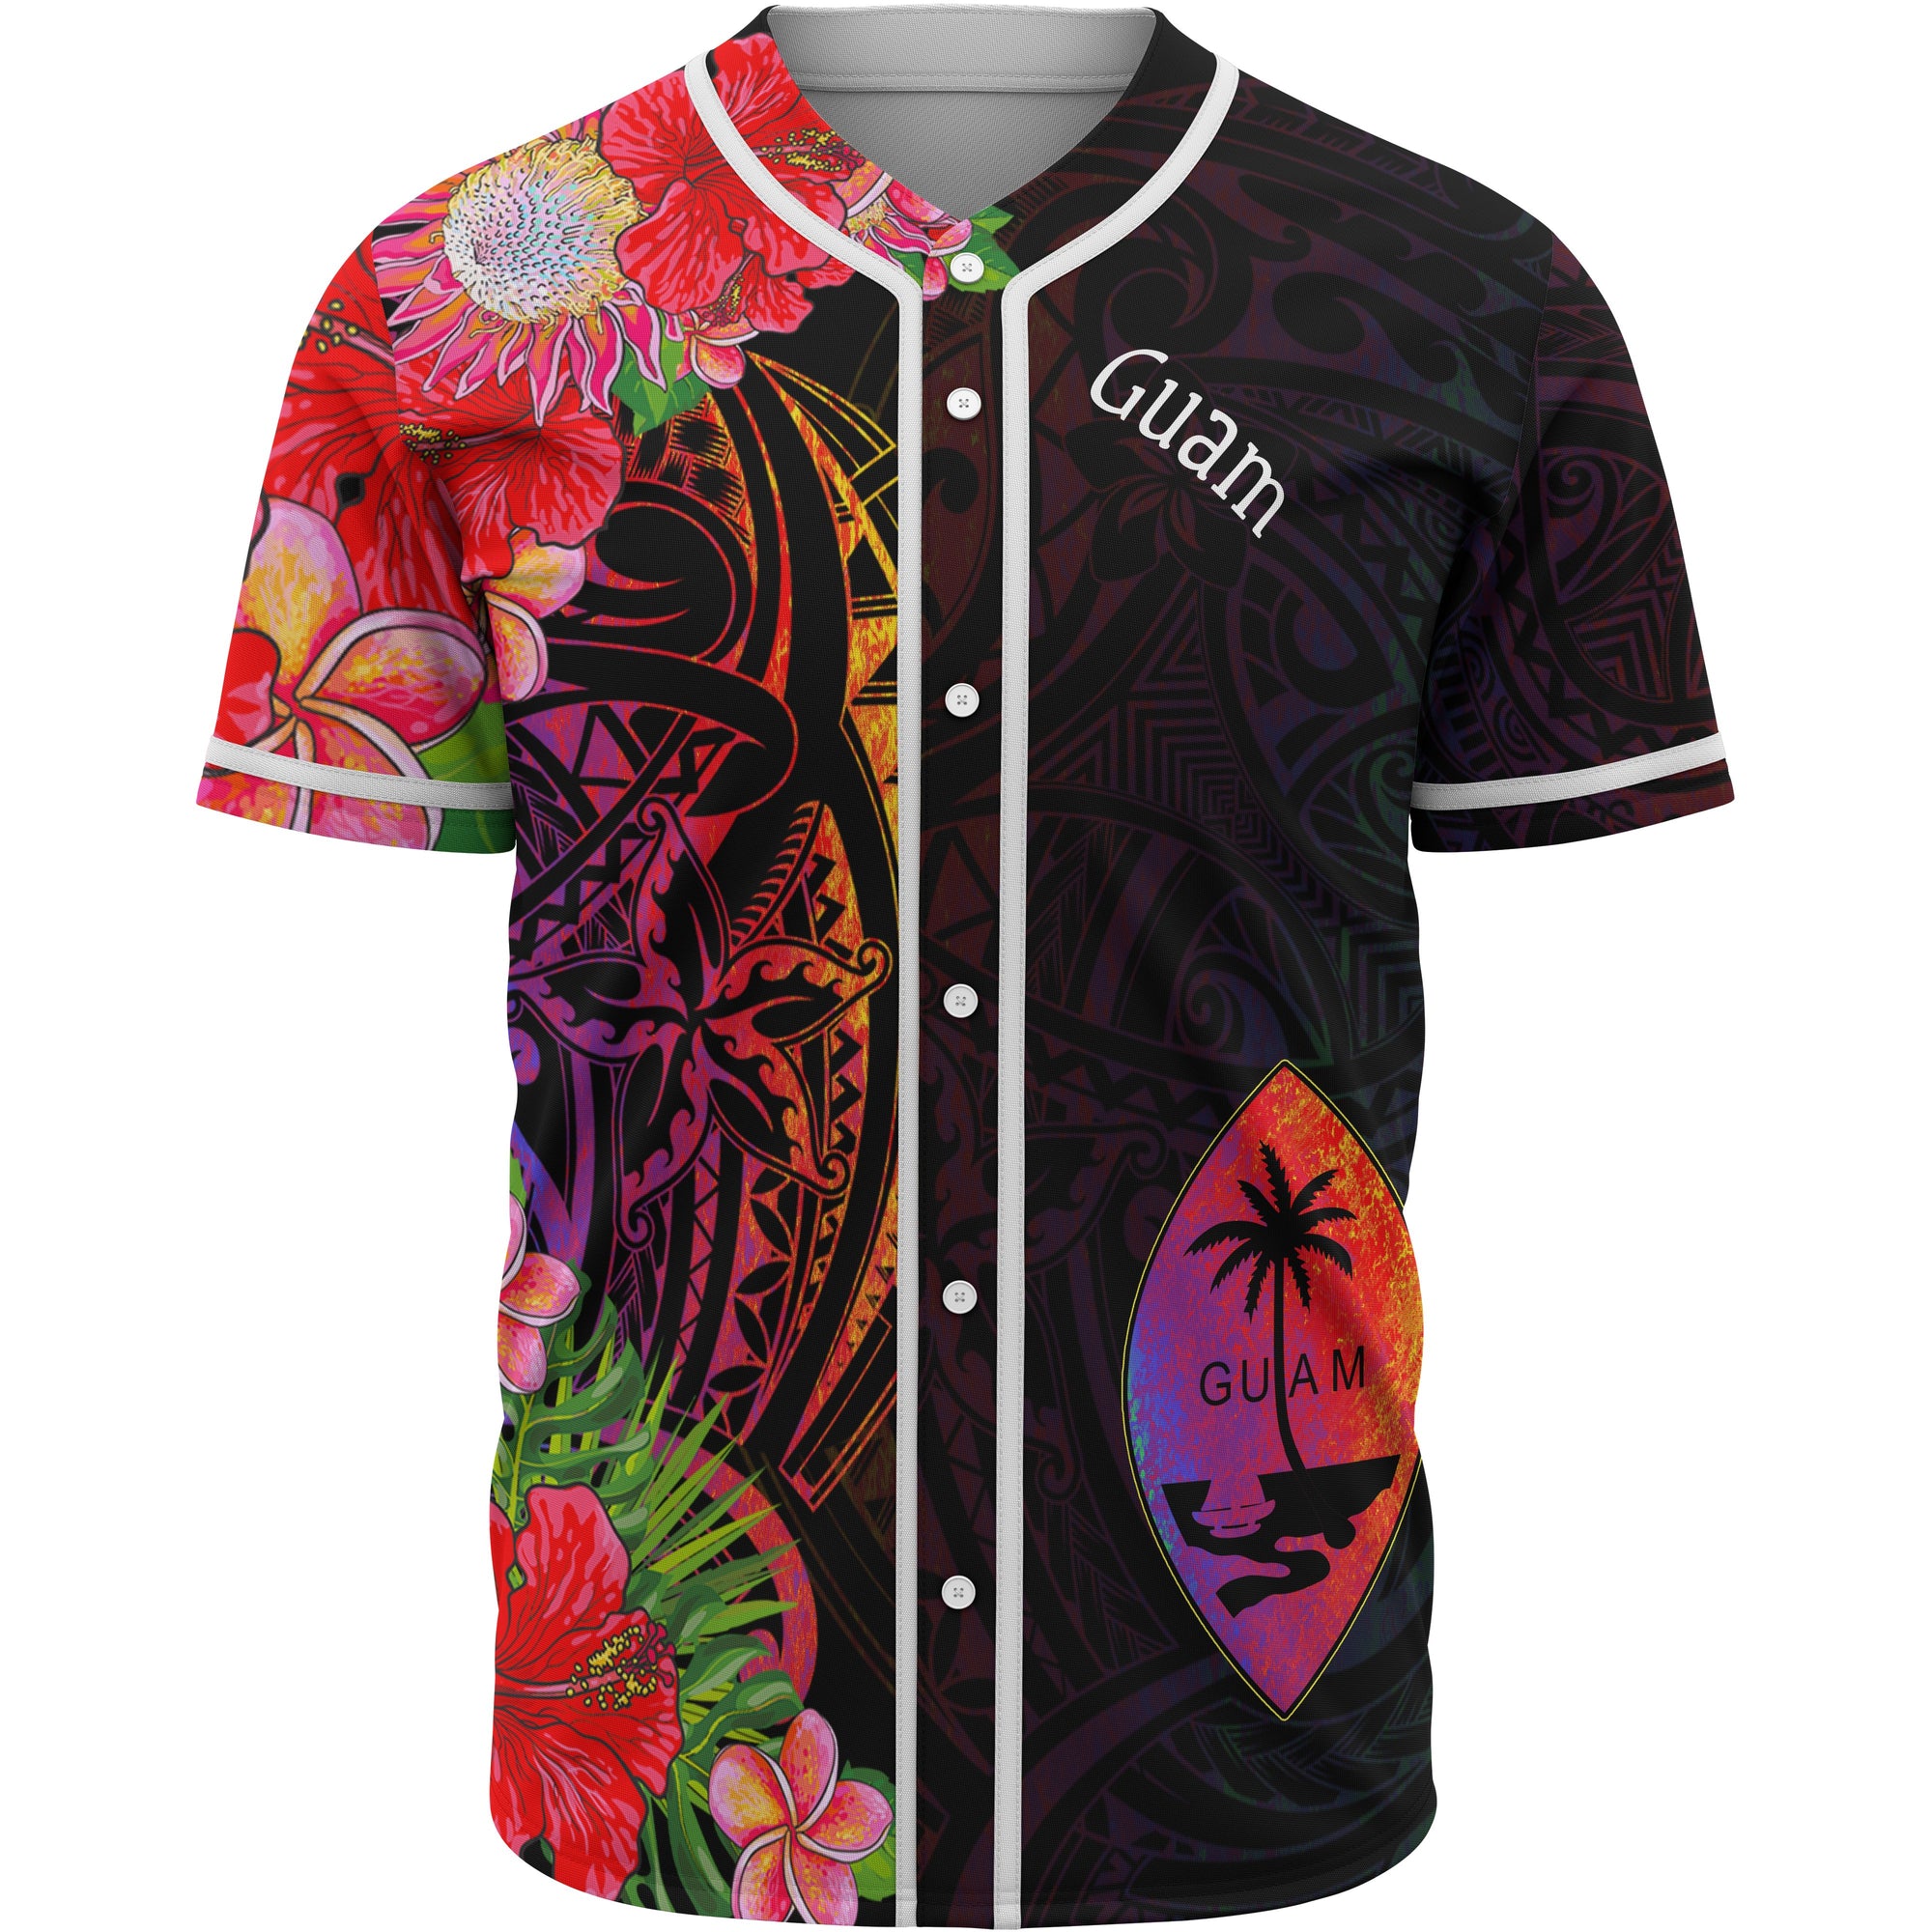 Guam Baseball Shirt - Tropical Hippie Style Unisex Black - Polynesian Pride